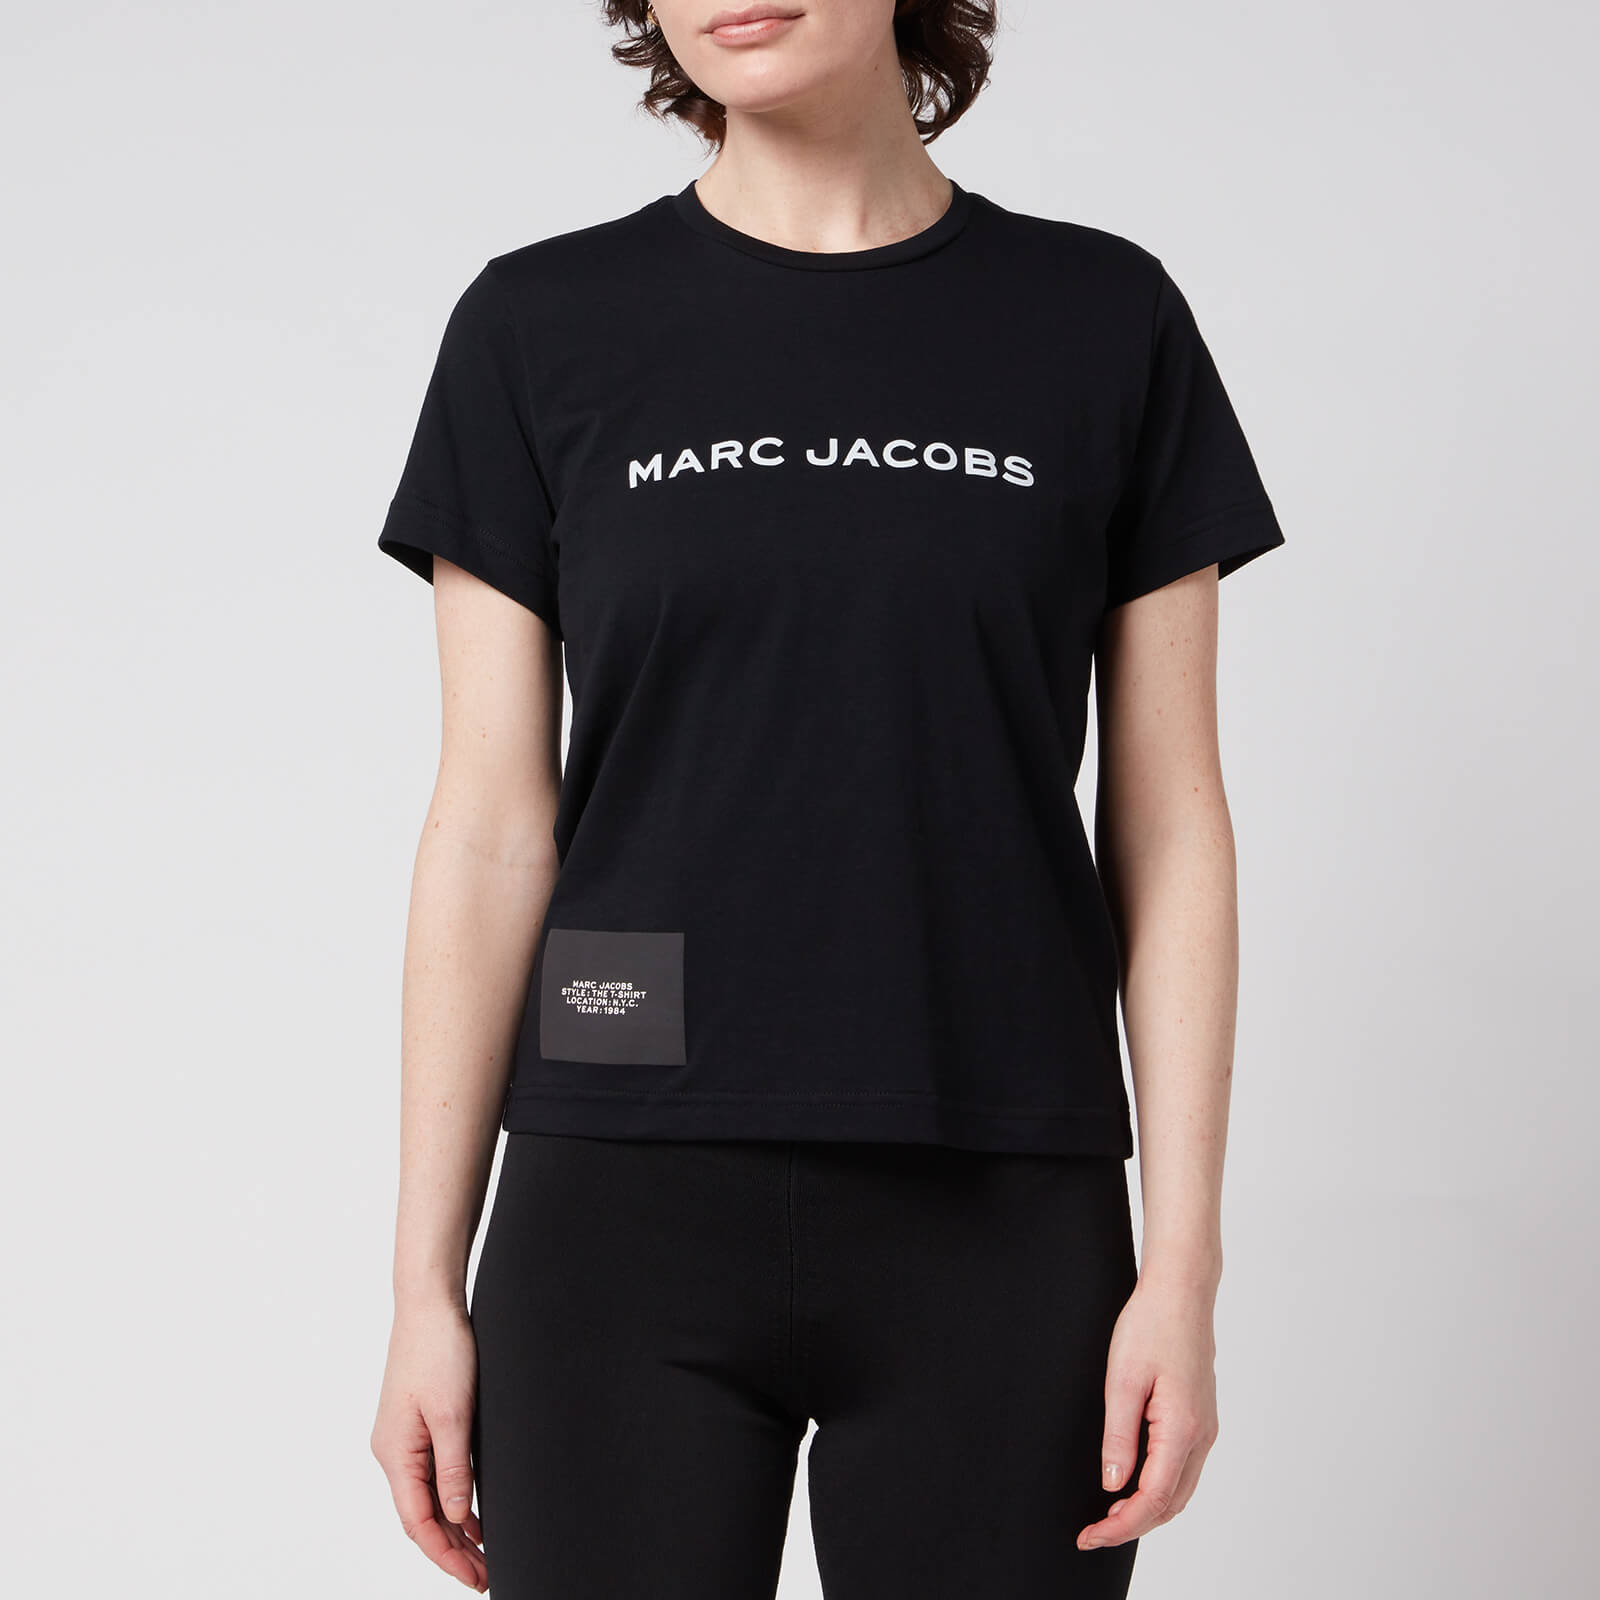 Marc Jacobs Women's The T-Shirt - Black - XS